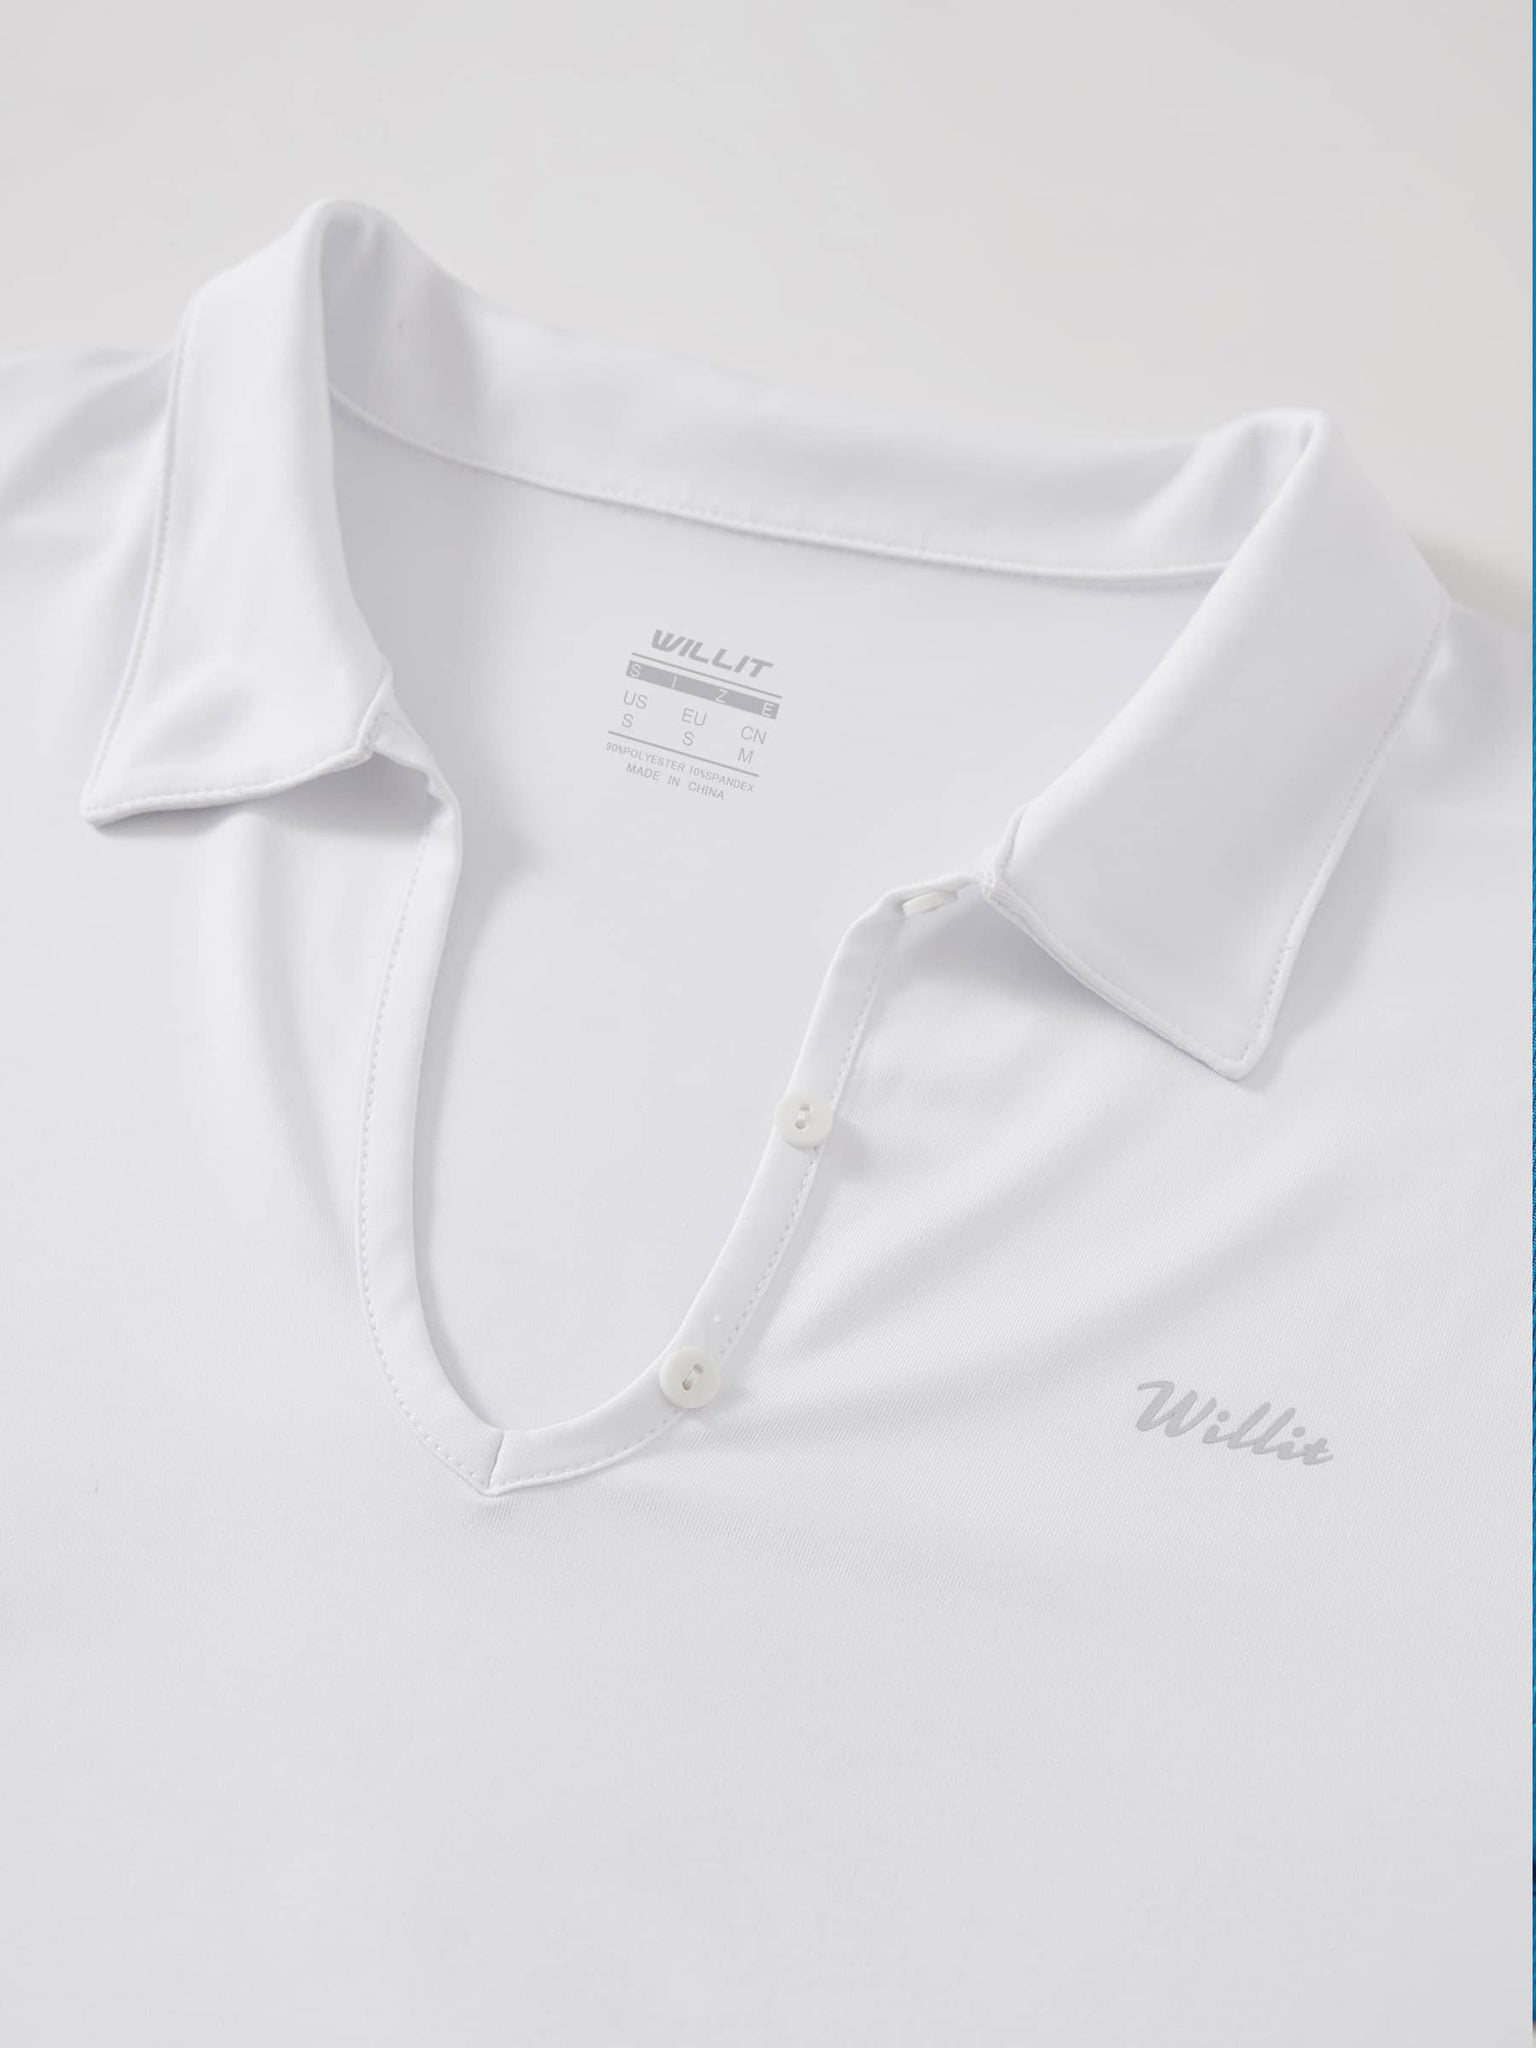 Willit Women's Golf Polo Short Sleeve Shirts_White4